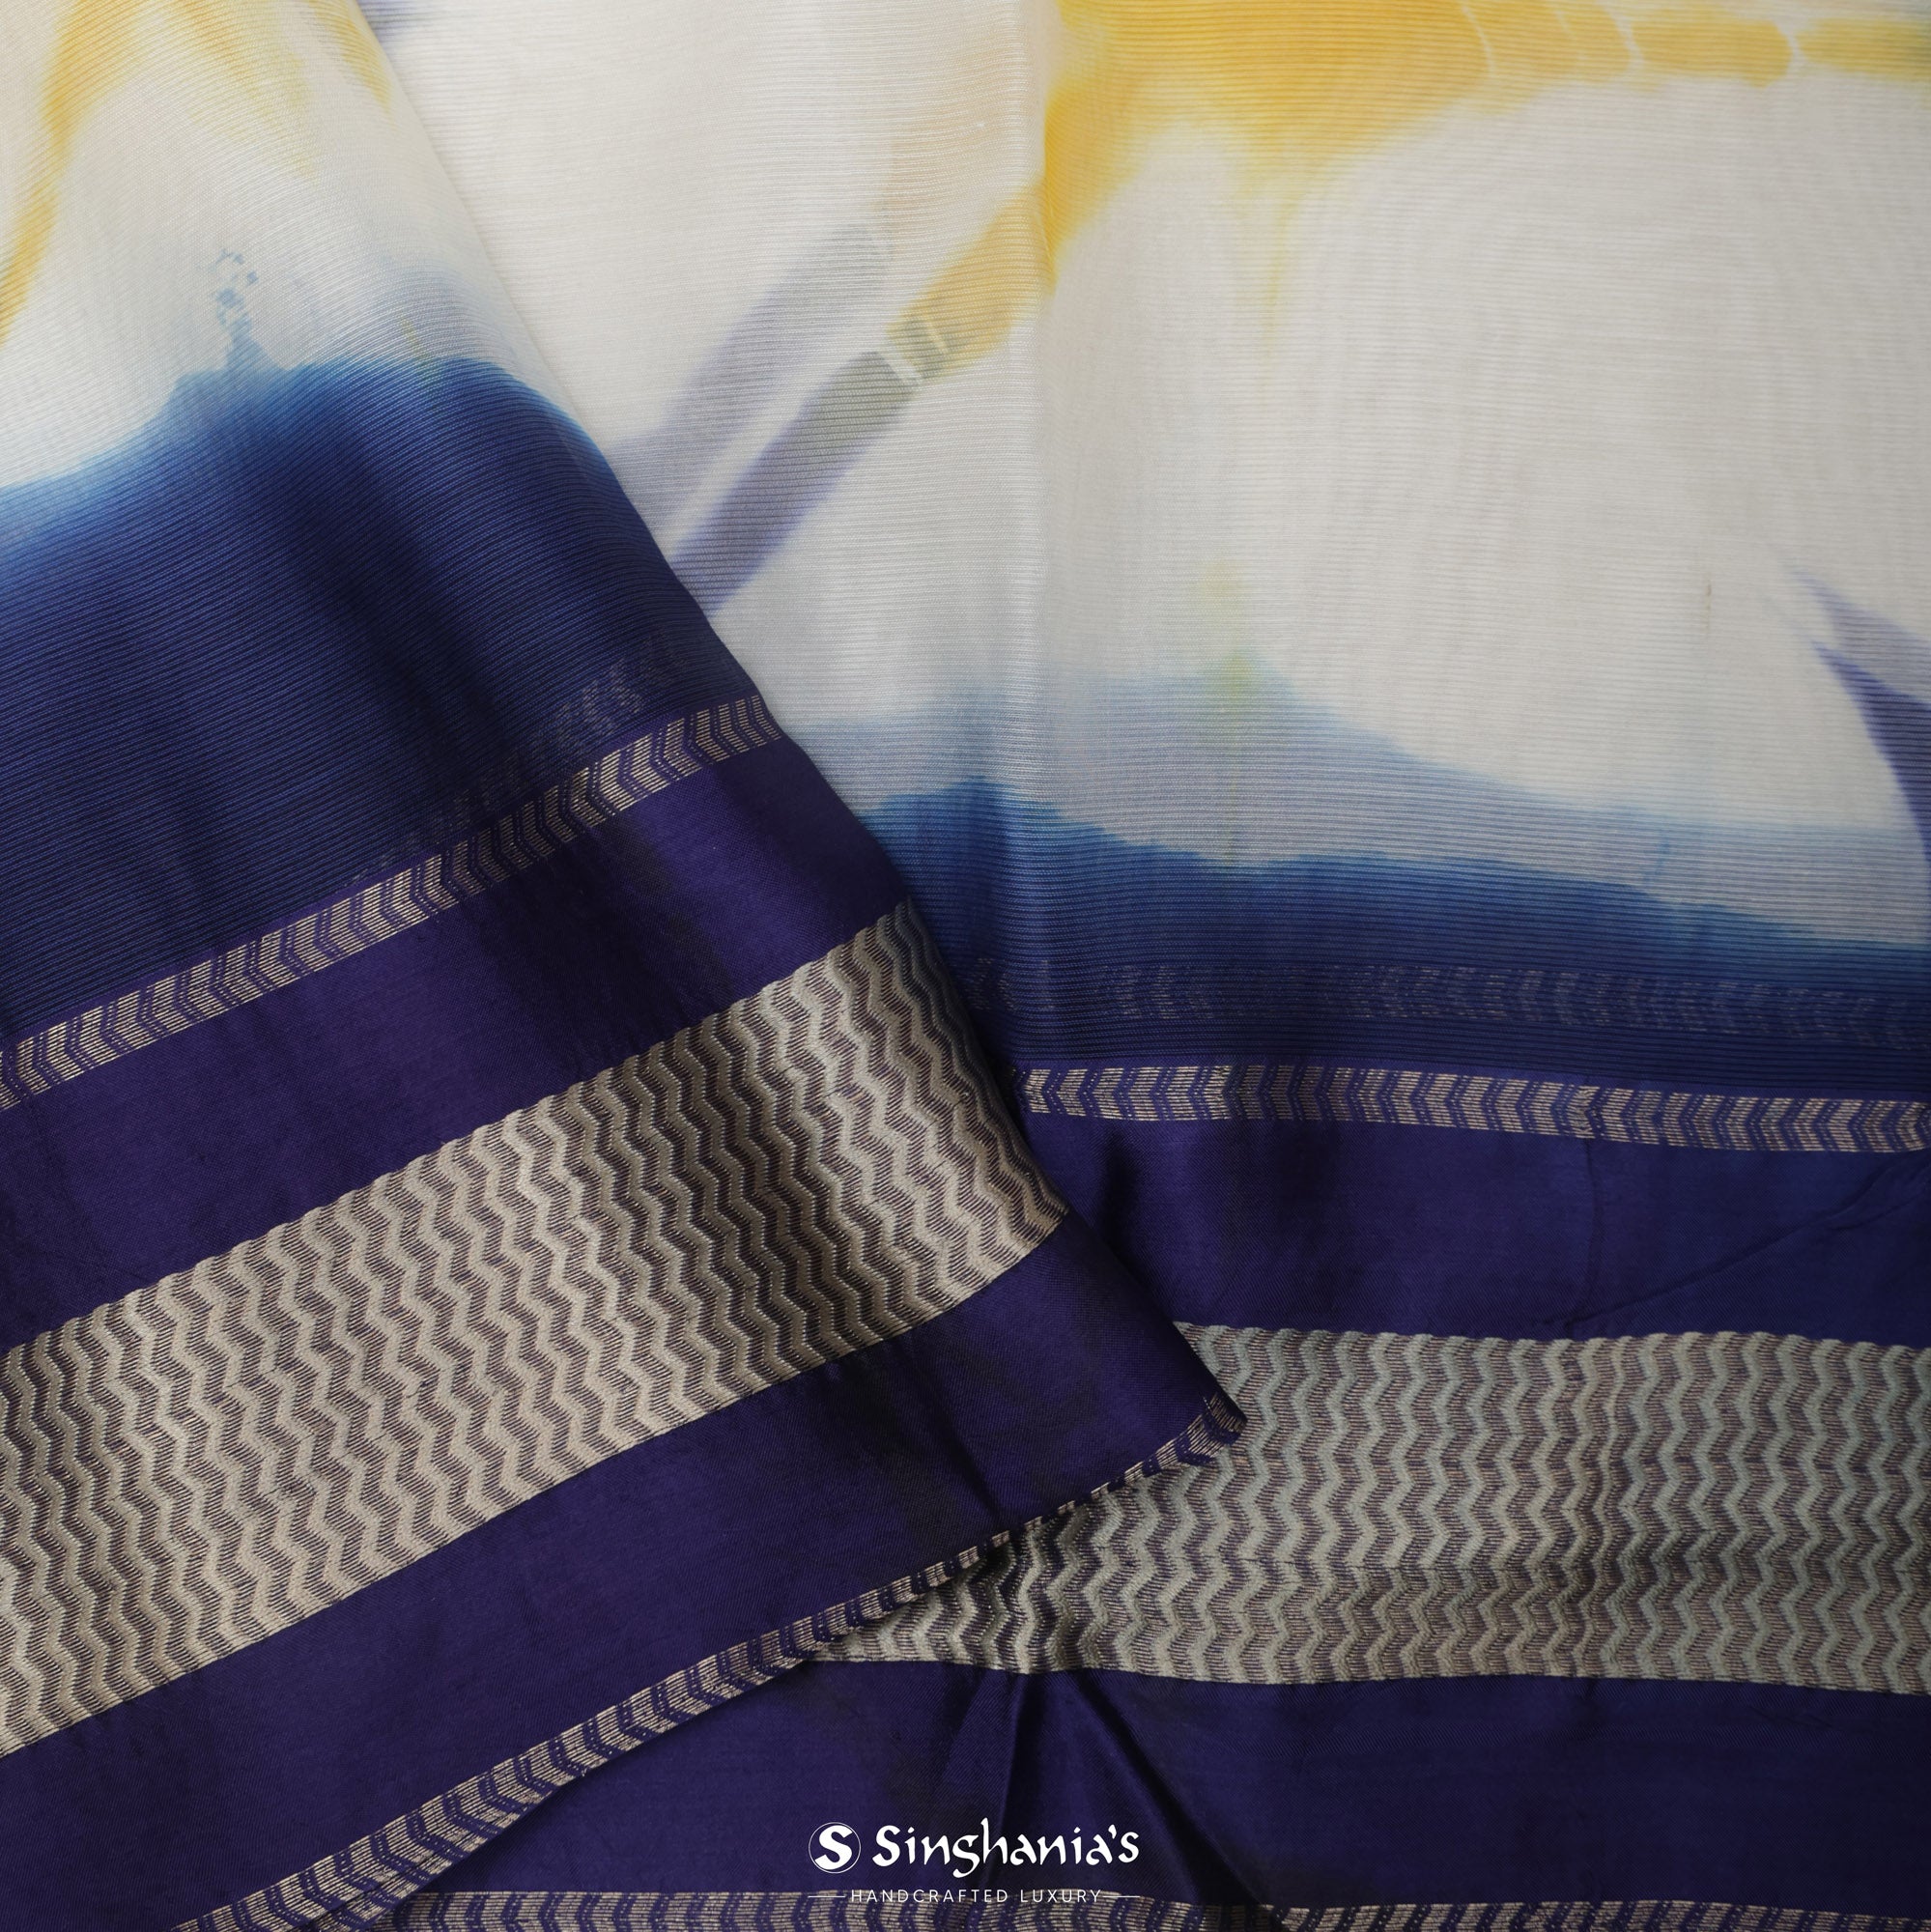 Cloud White Printed Maheshwari Saree With Tie-Dye Design